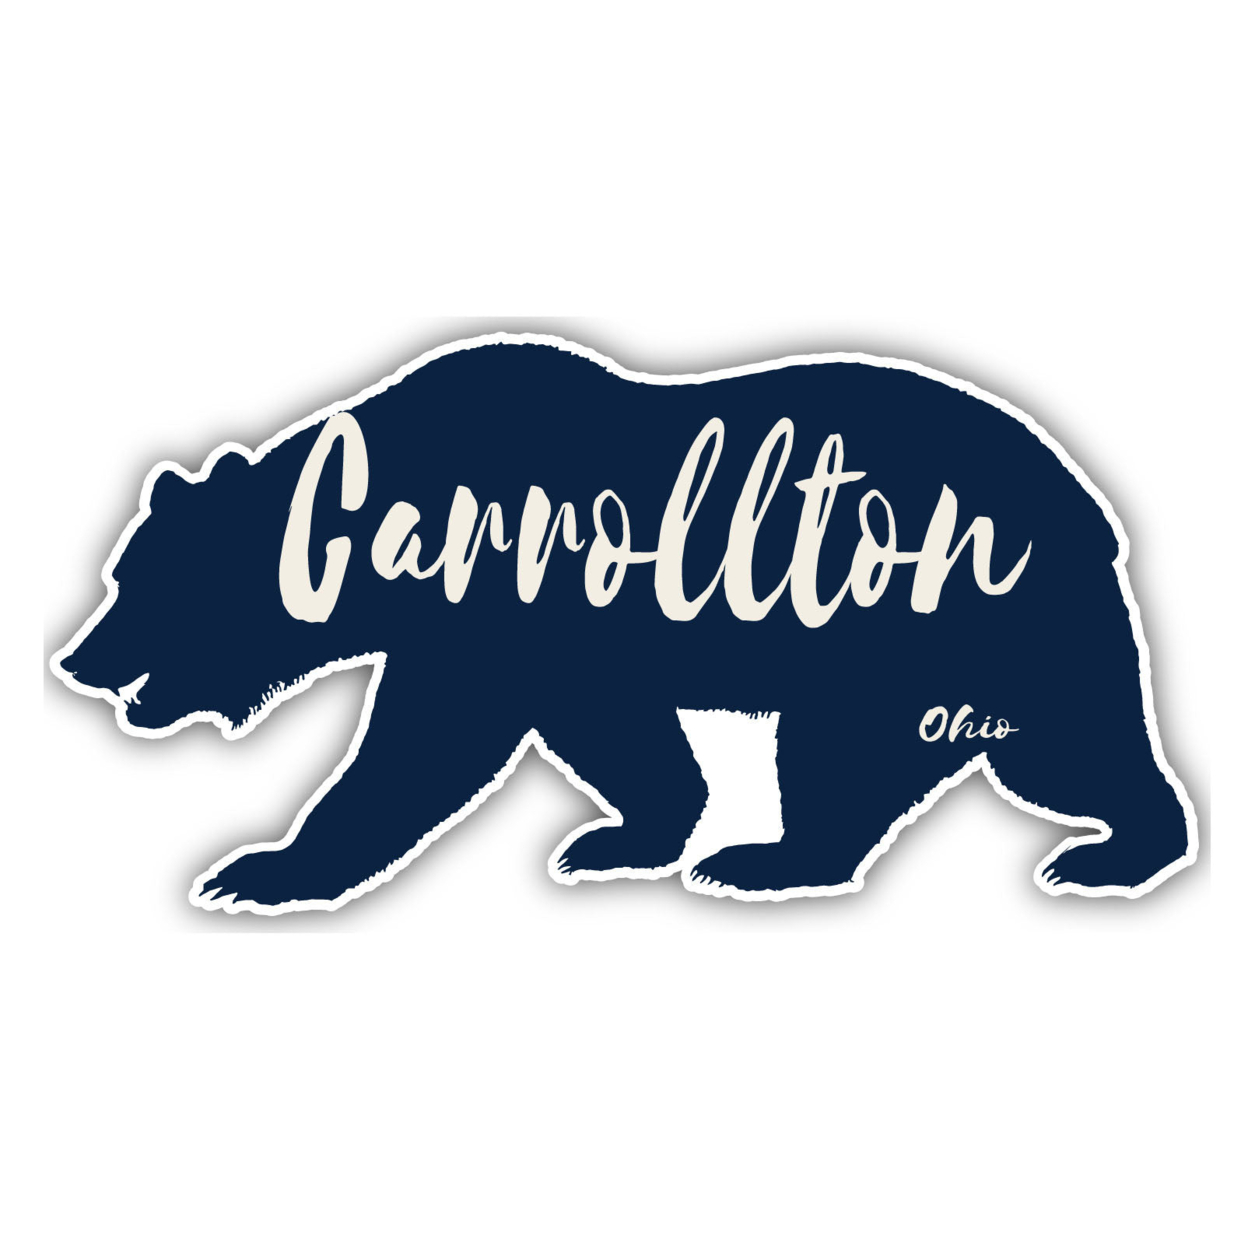 Carrollton Ohio Souvenir Decorative Stickers (Choose Theme And Size) - Single Unit, 12-Inch, Bear